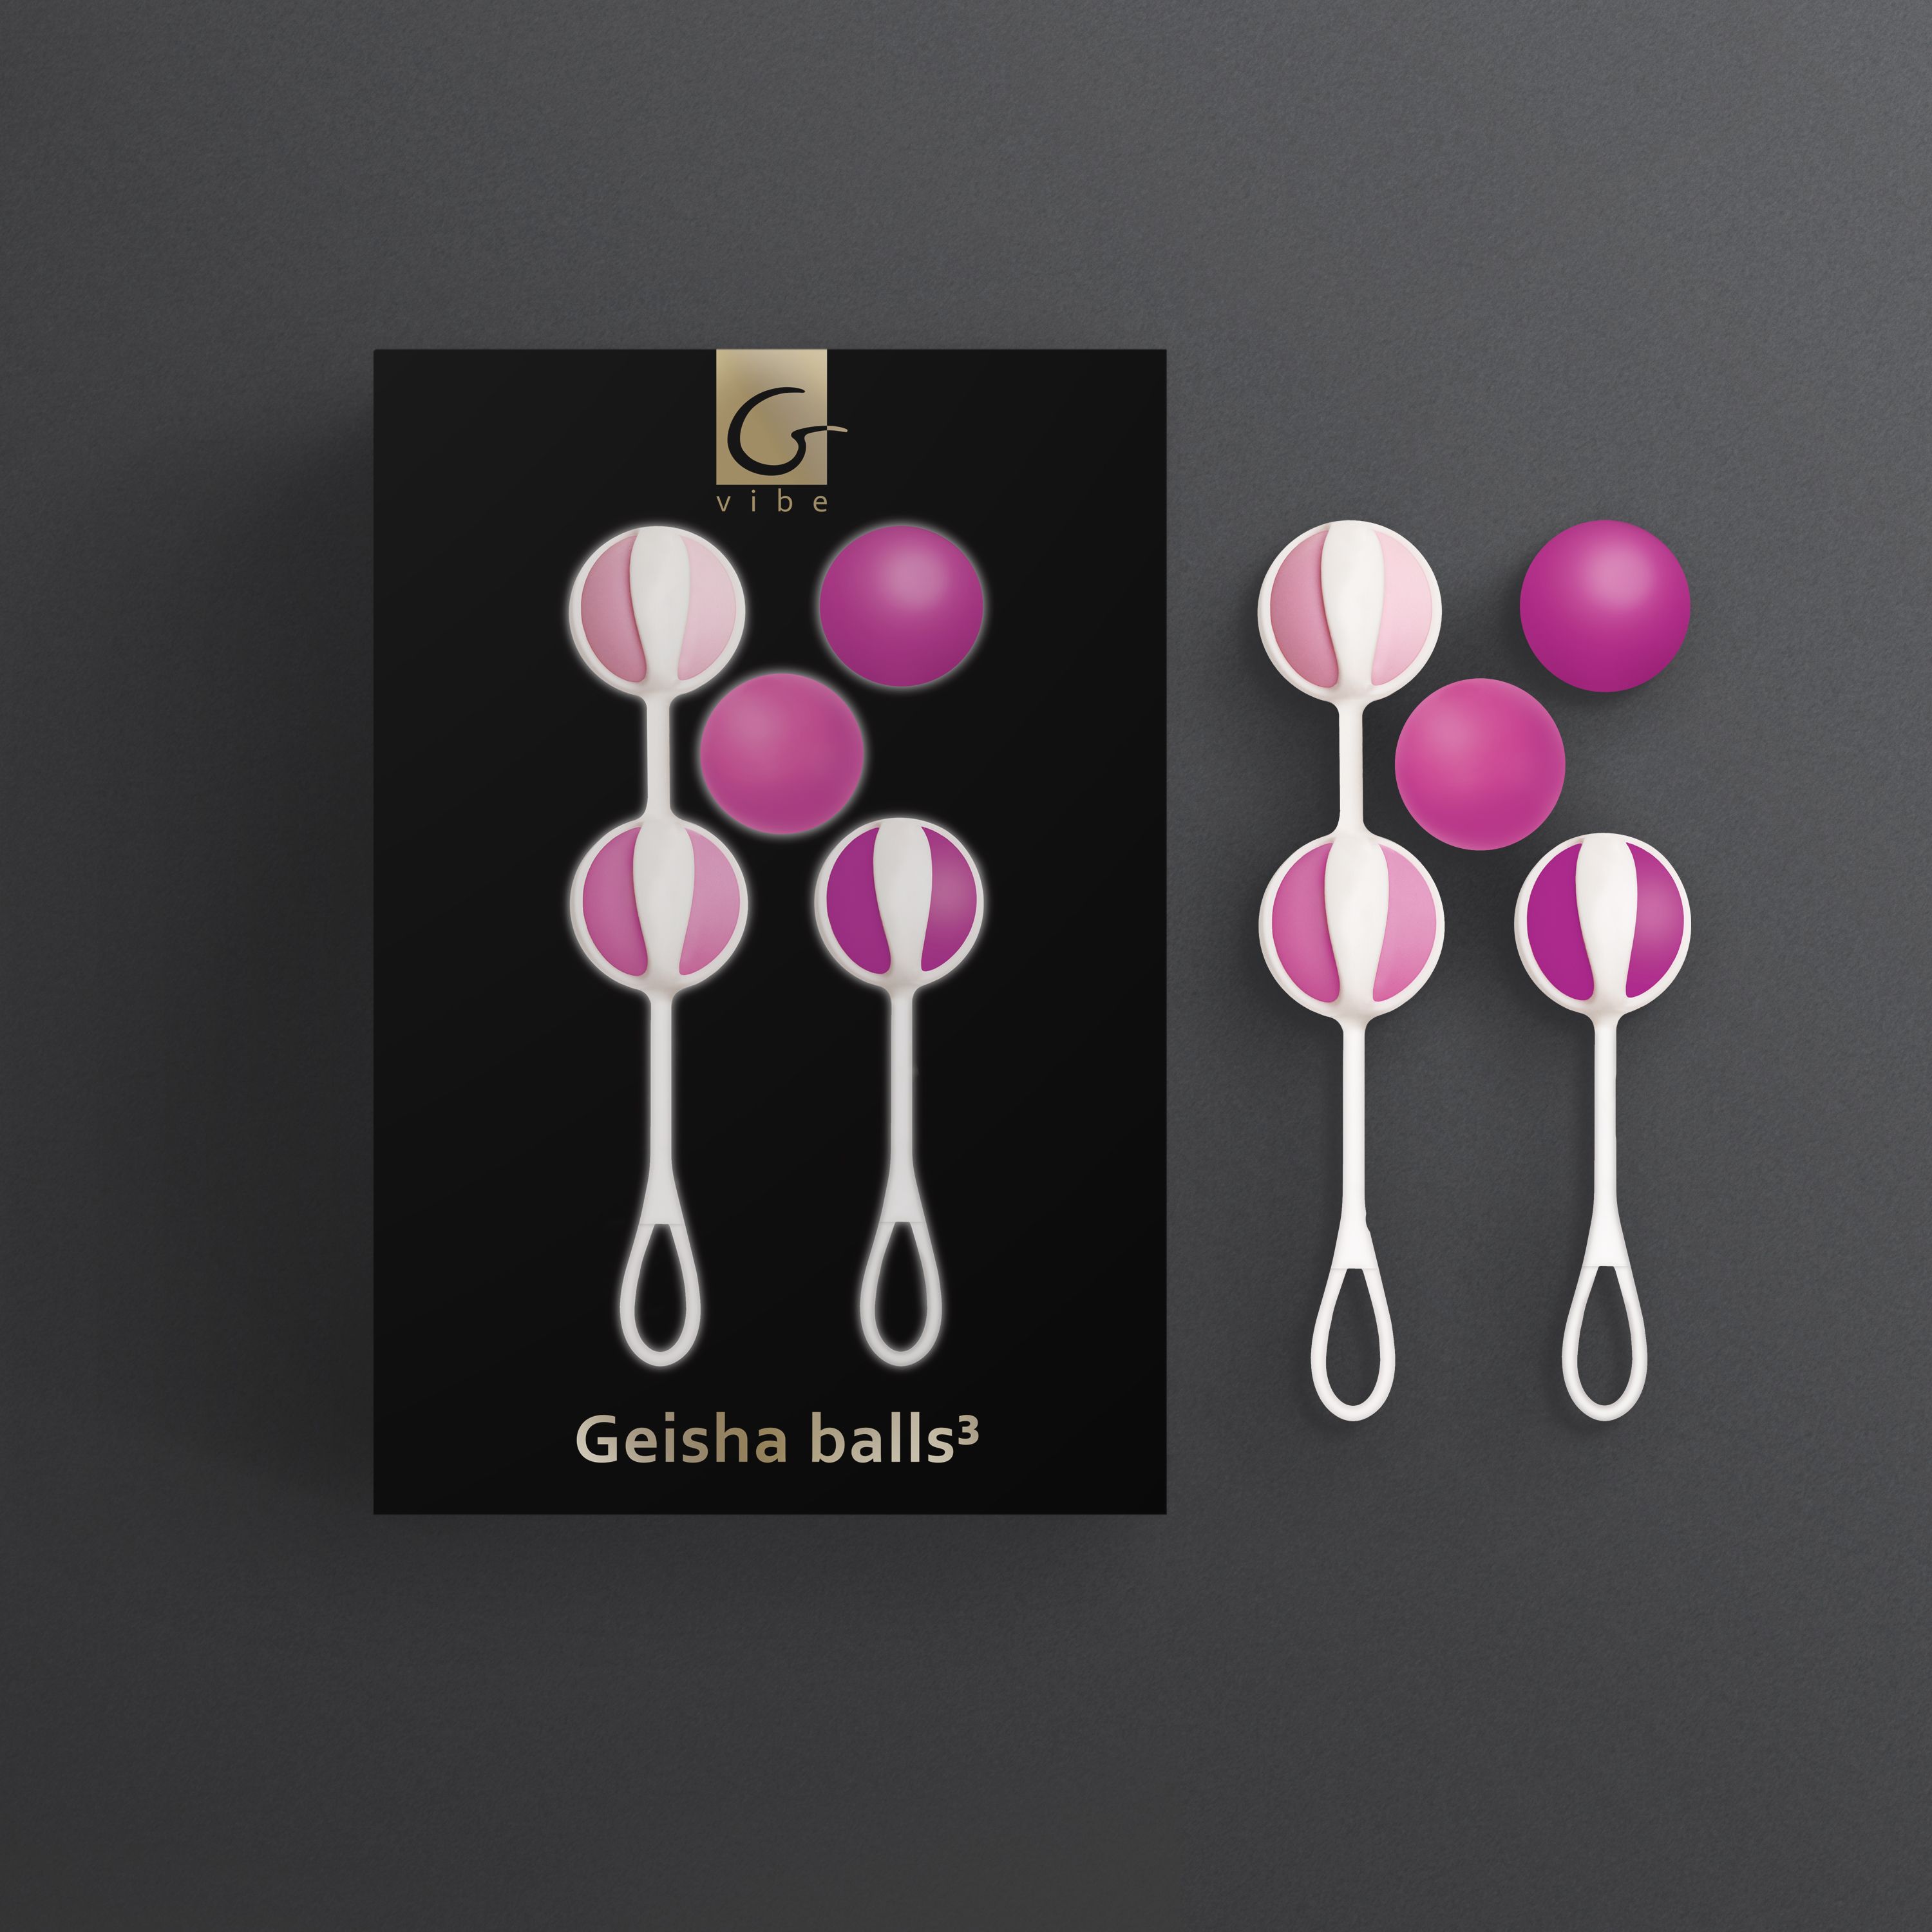 Gvibe Geisha balls. Gvibe Gballs 3 app Petal Rose - тренажёр интимных мышц, 8х3 см. G vibe